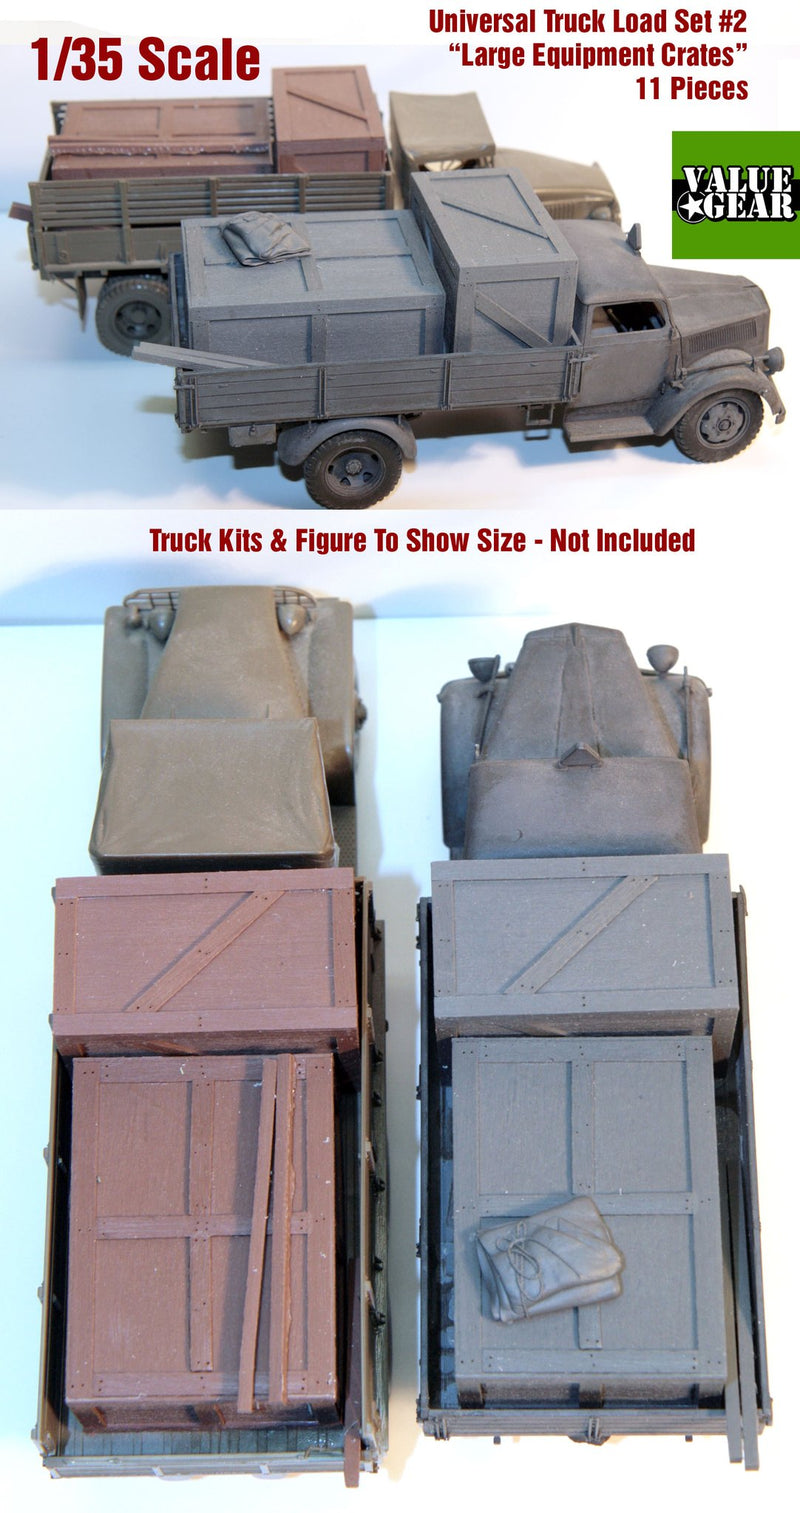 Value Gear GUT02 1/35 Universal Truck Load Set